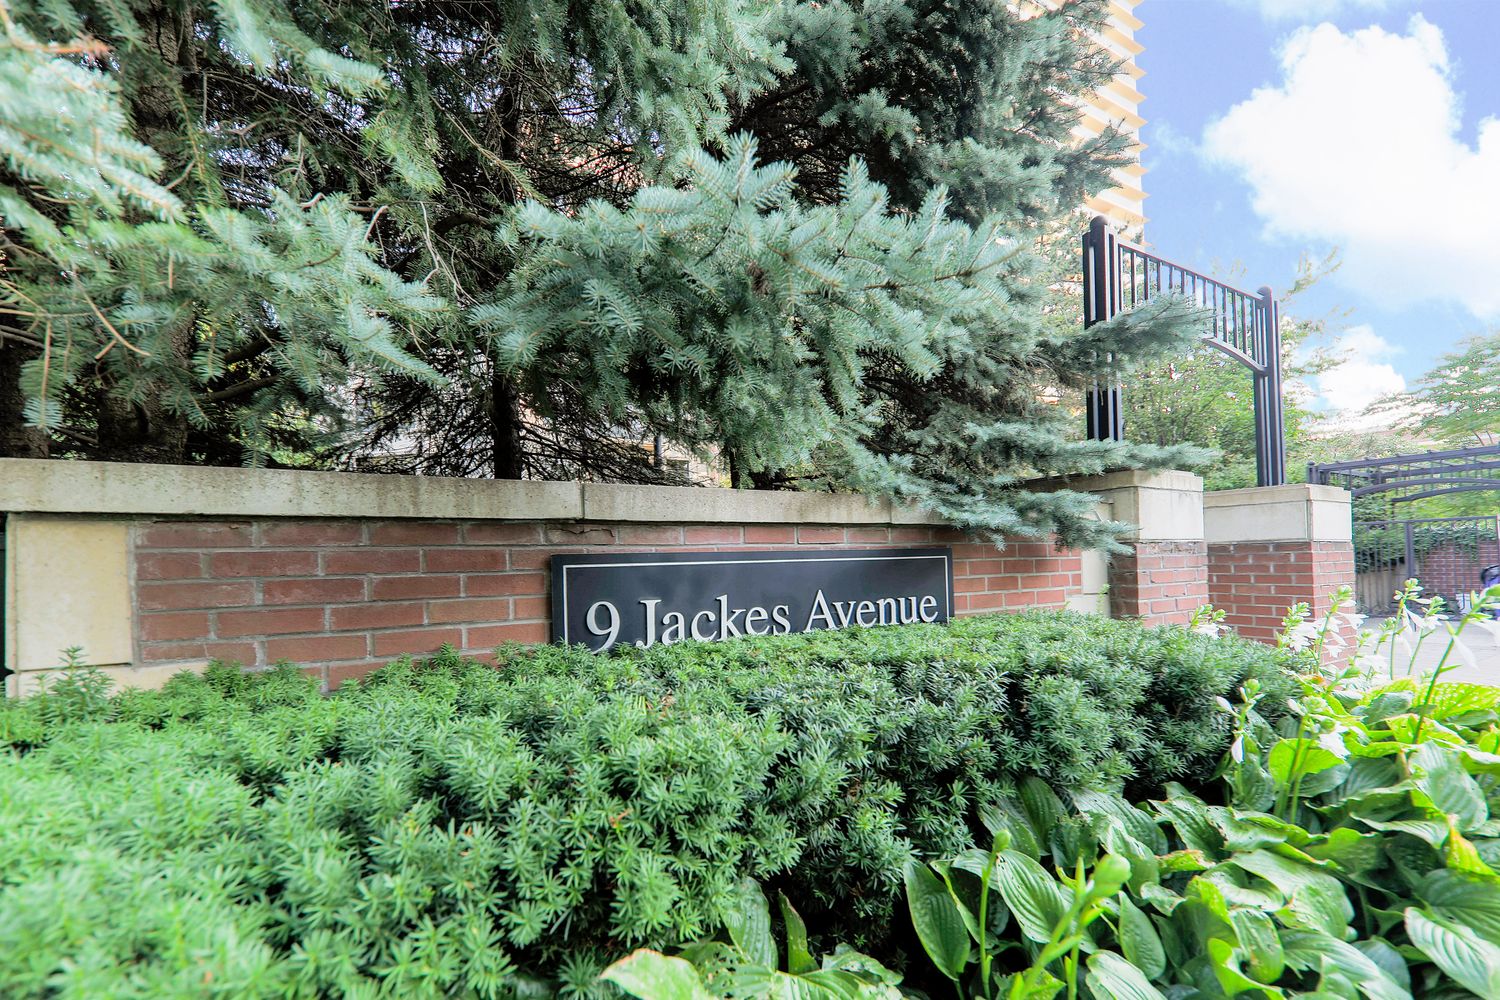 9 Jackes Avenue. Number Nine Jackes is located in  Midtown, Toronto - image #5 of 5